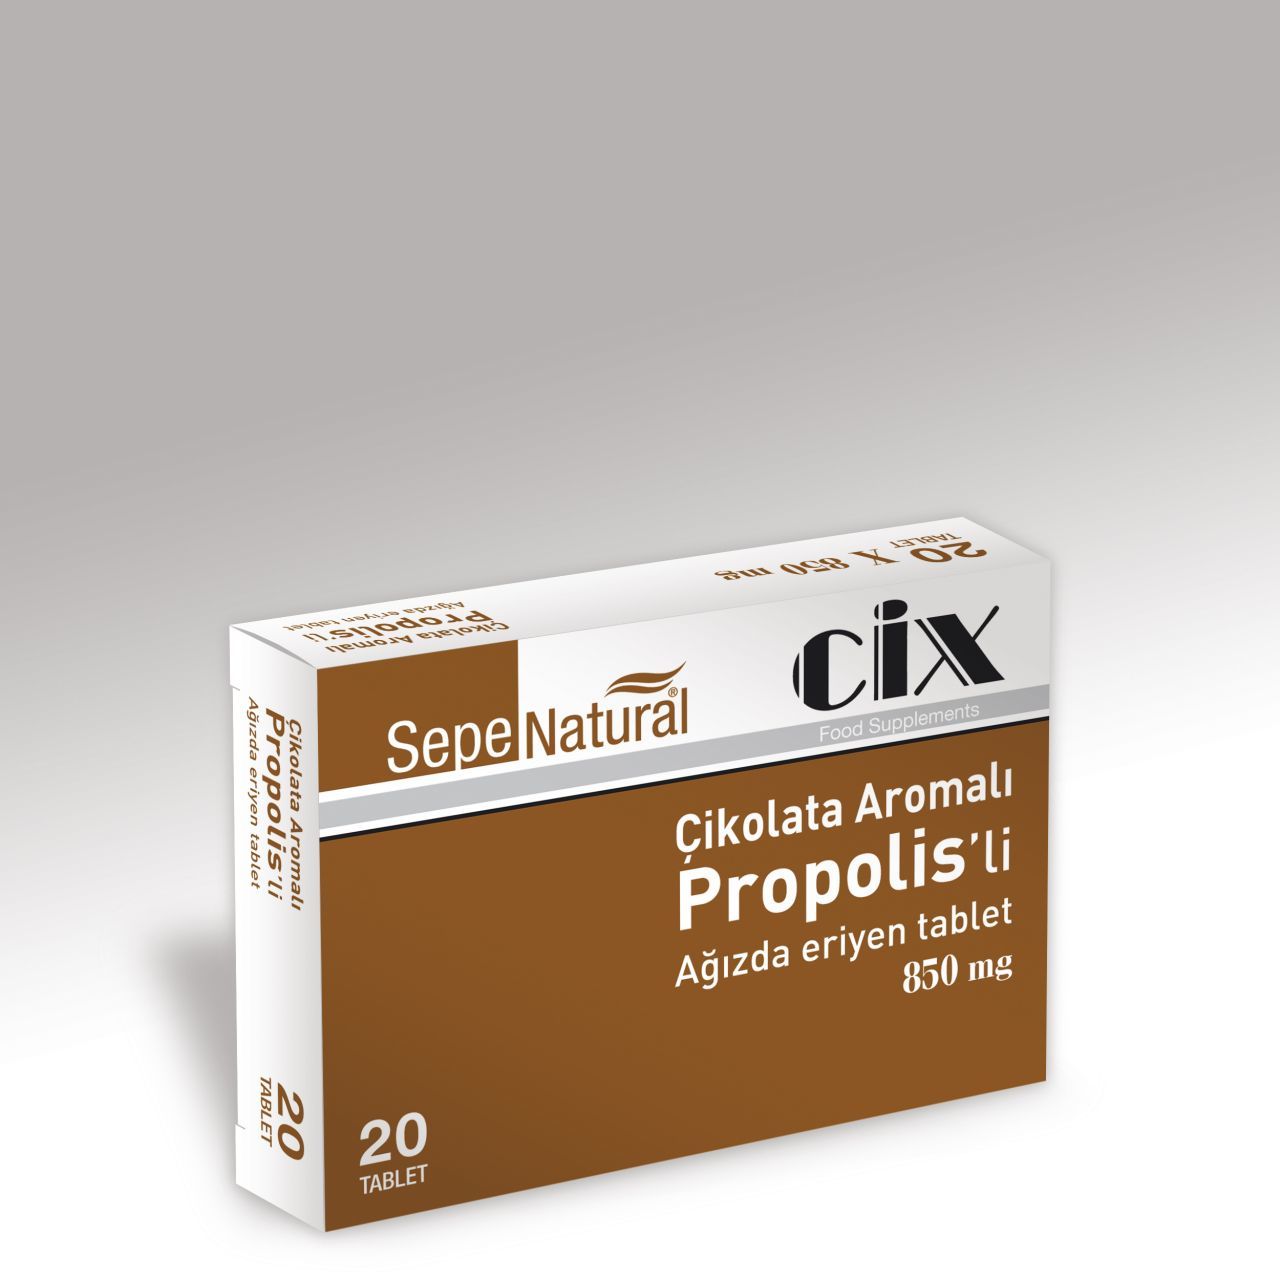 Propolis 20 Ağızda Eriyen Çikolata Aromalı Tablet x 850 mg Fiyatı 16,84